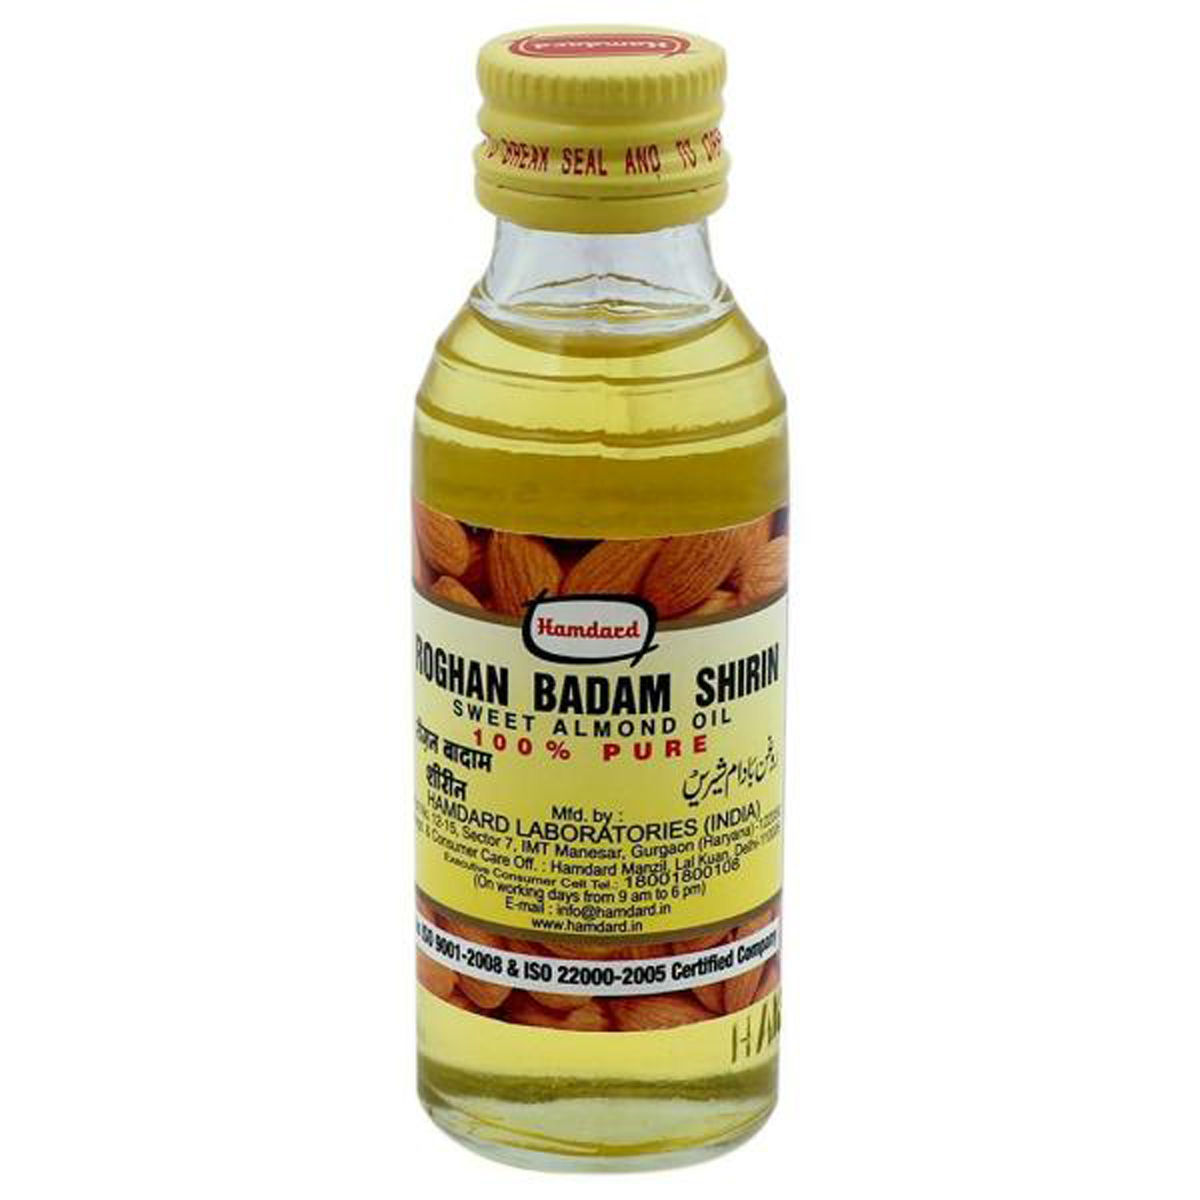 Hamdard Rogan Badam Shirin Almond Oil, 50 ml Price, Uses, Side Effects,  Composition - Apollo Pharmacy